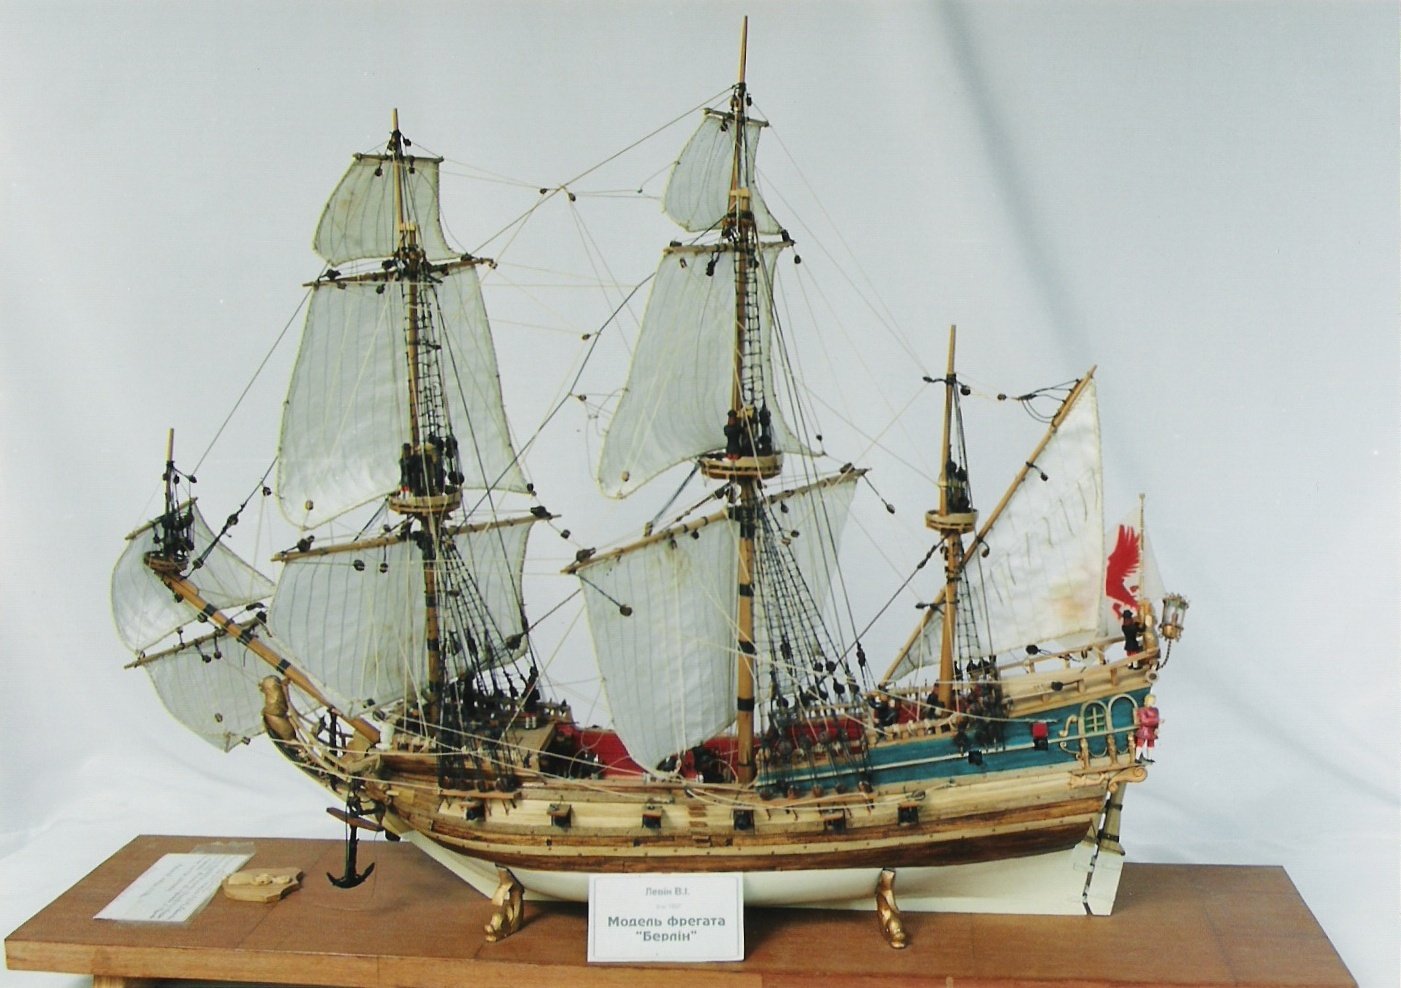 Фрегат каталог. Фрегат «Koenig von Preussen», 1750. Фрегат Берлин 1674. Фрегат корабль 17 века. Бриг корабль 17 века.